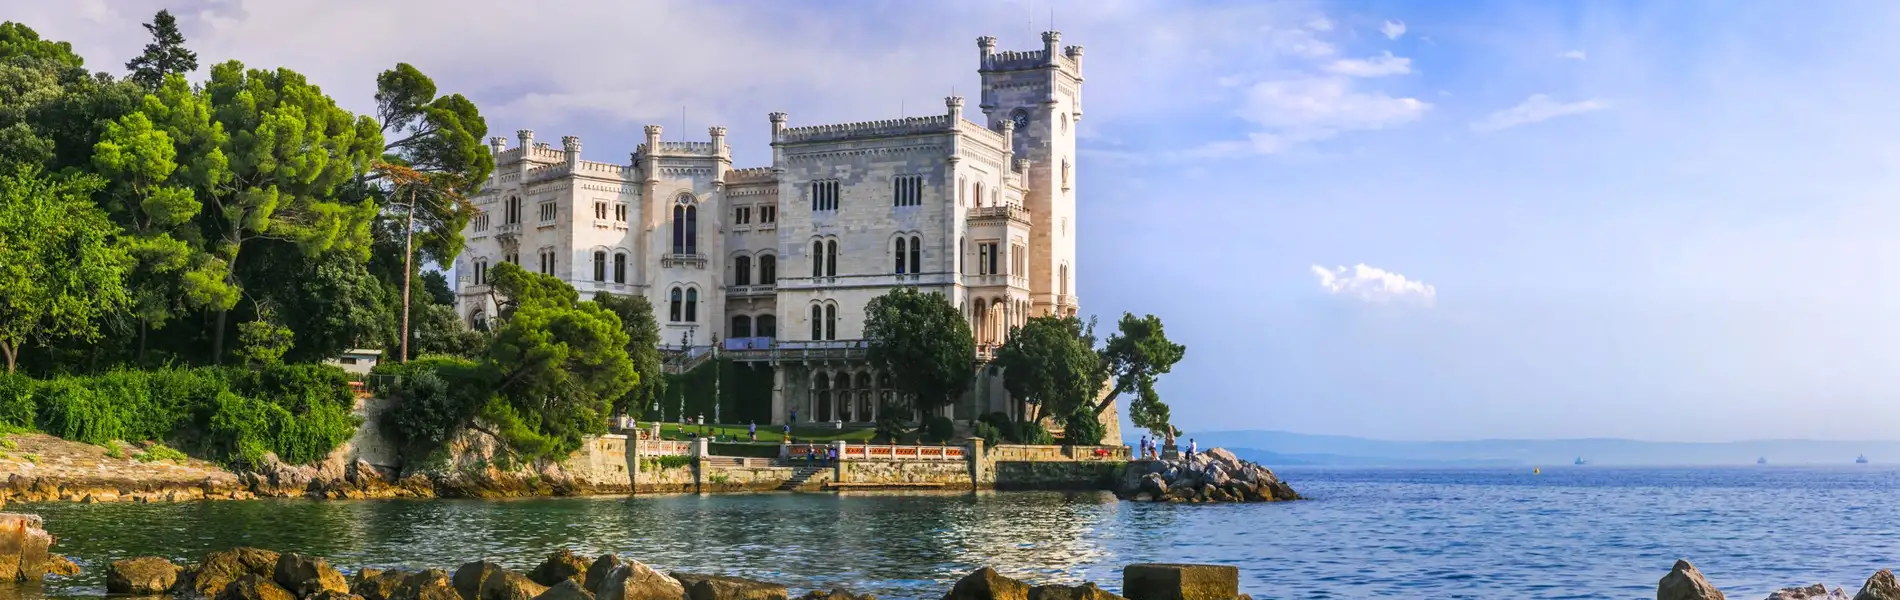 Trieste (Italy)